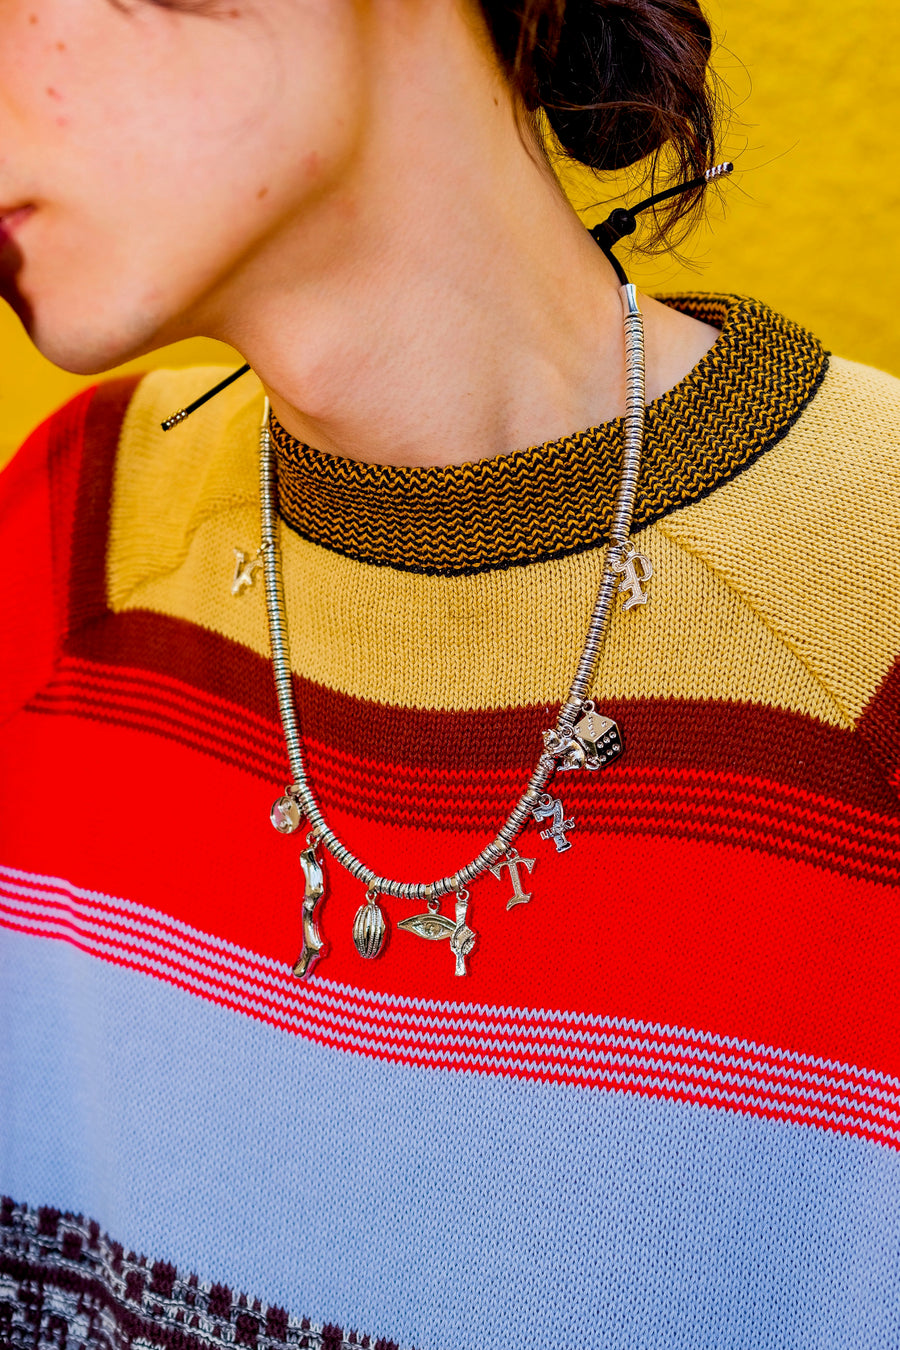 TOGA VIRILIS(トーガ ビリリース)のMotif necklace SILVERの通販